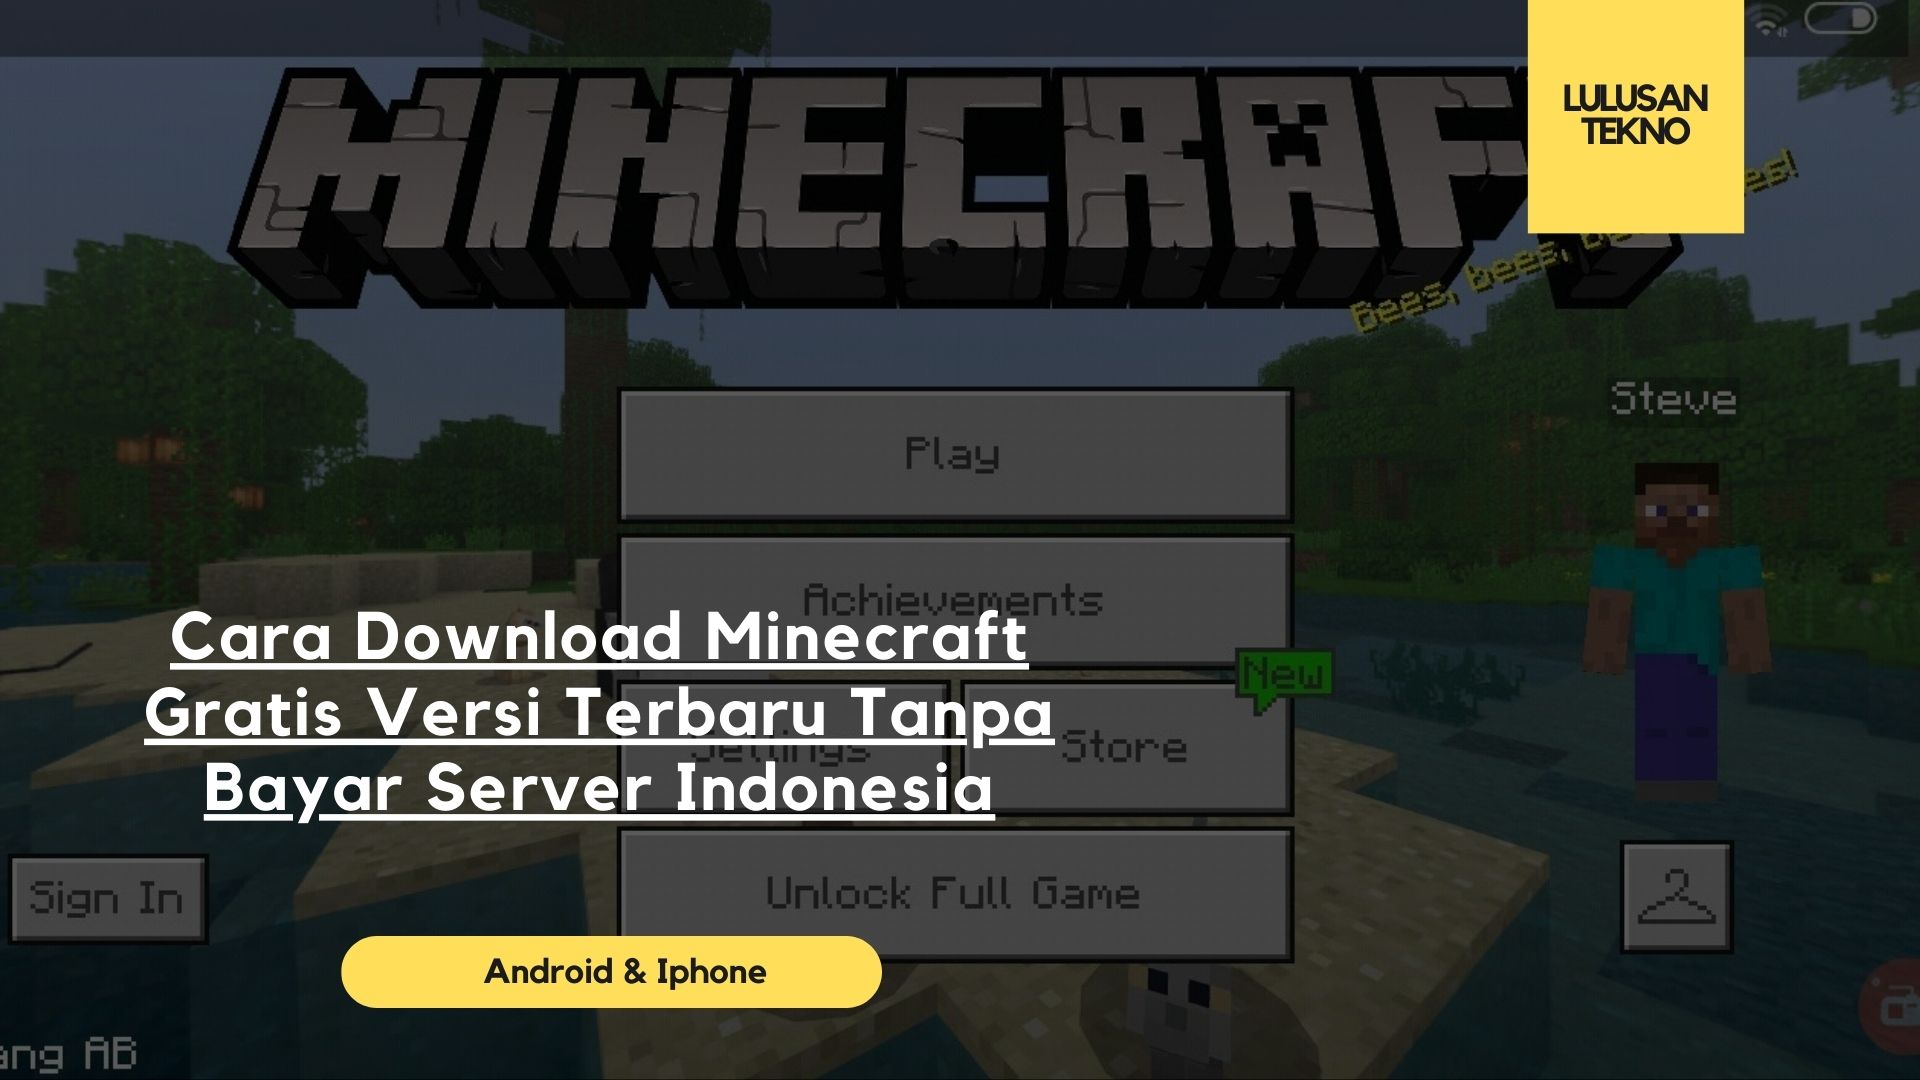 Cara Download Minecraft Gratis Versi Terbaru Tanpa Bayar Server Indonesia